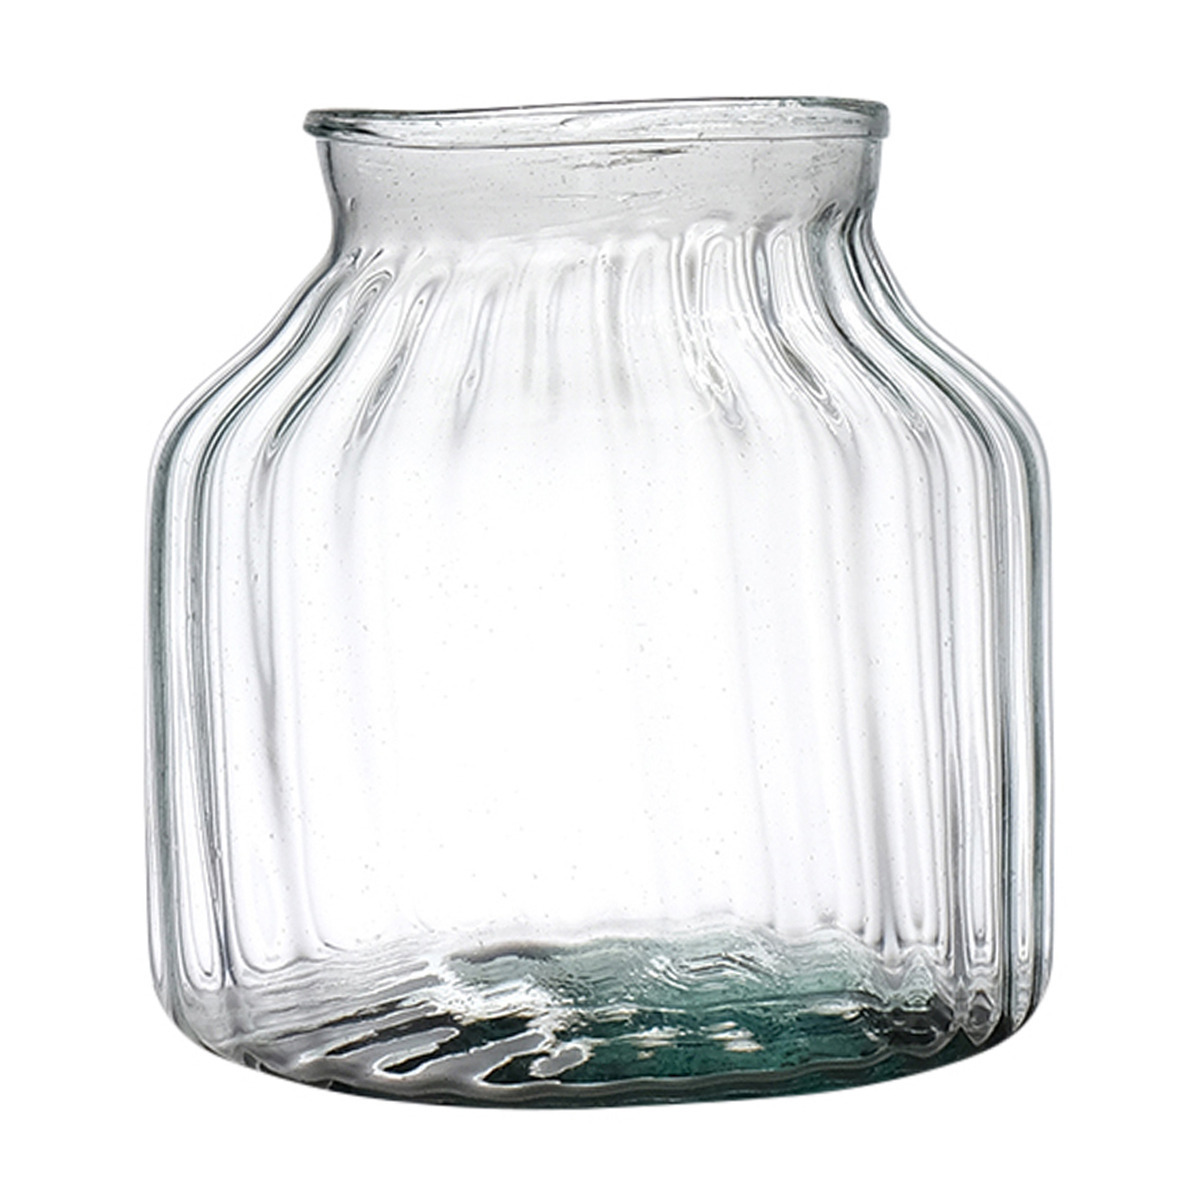 Hakbijl Glass Bloemenvaas Organic - transparant - eco glas - D21 x H20 cm - Melkbus vaas -